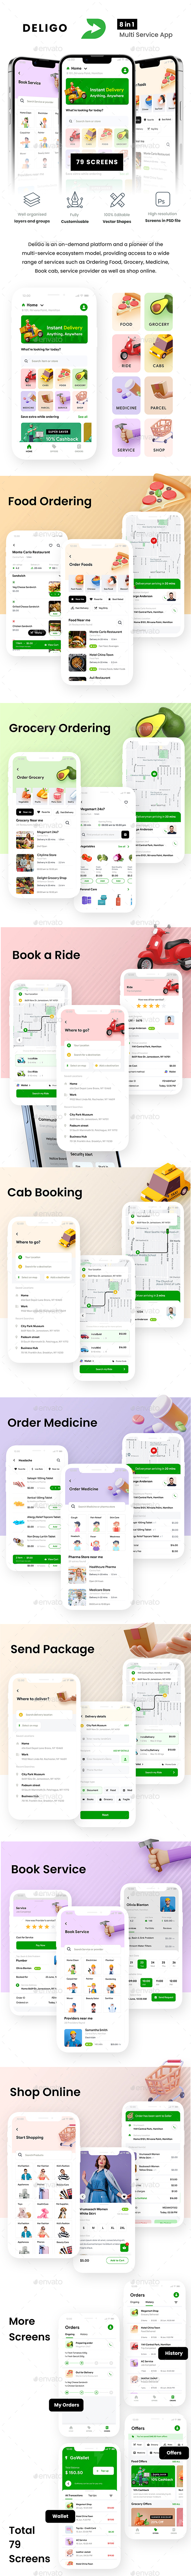 8 in1 Multi-service App UI |Courier, Cab & Home Service Booking App| Delivery & Shopping App| DeliGo